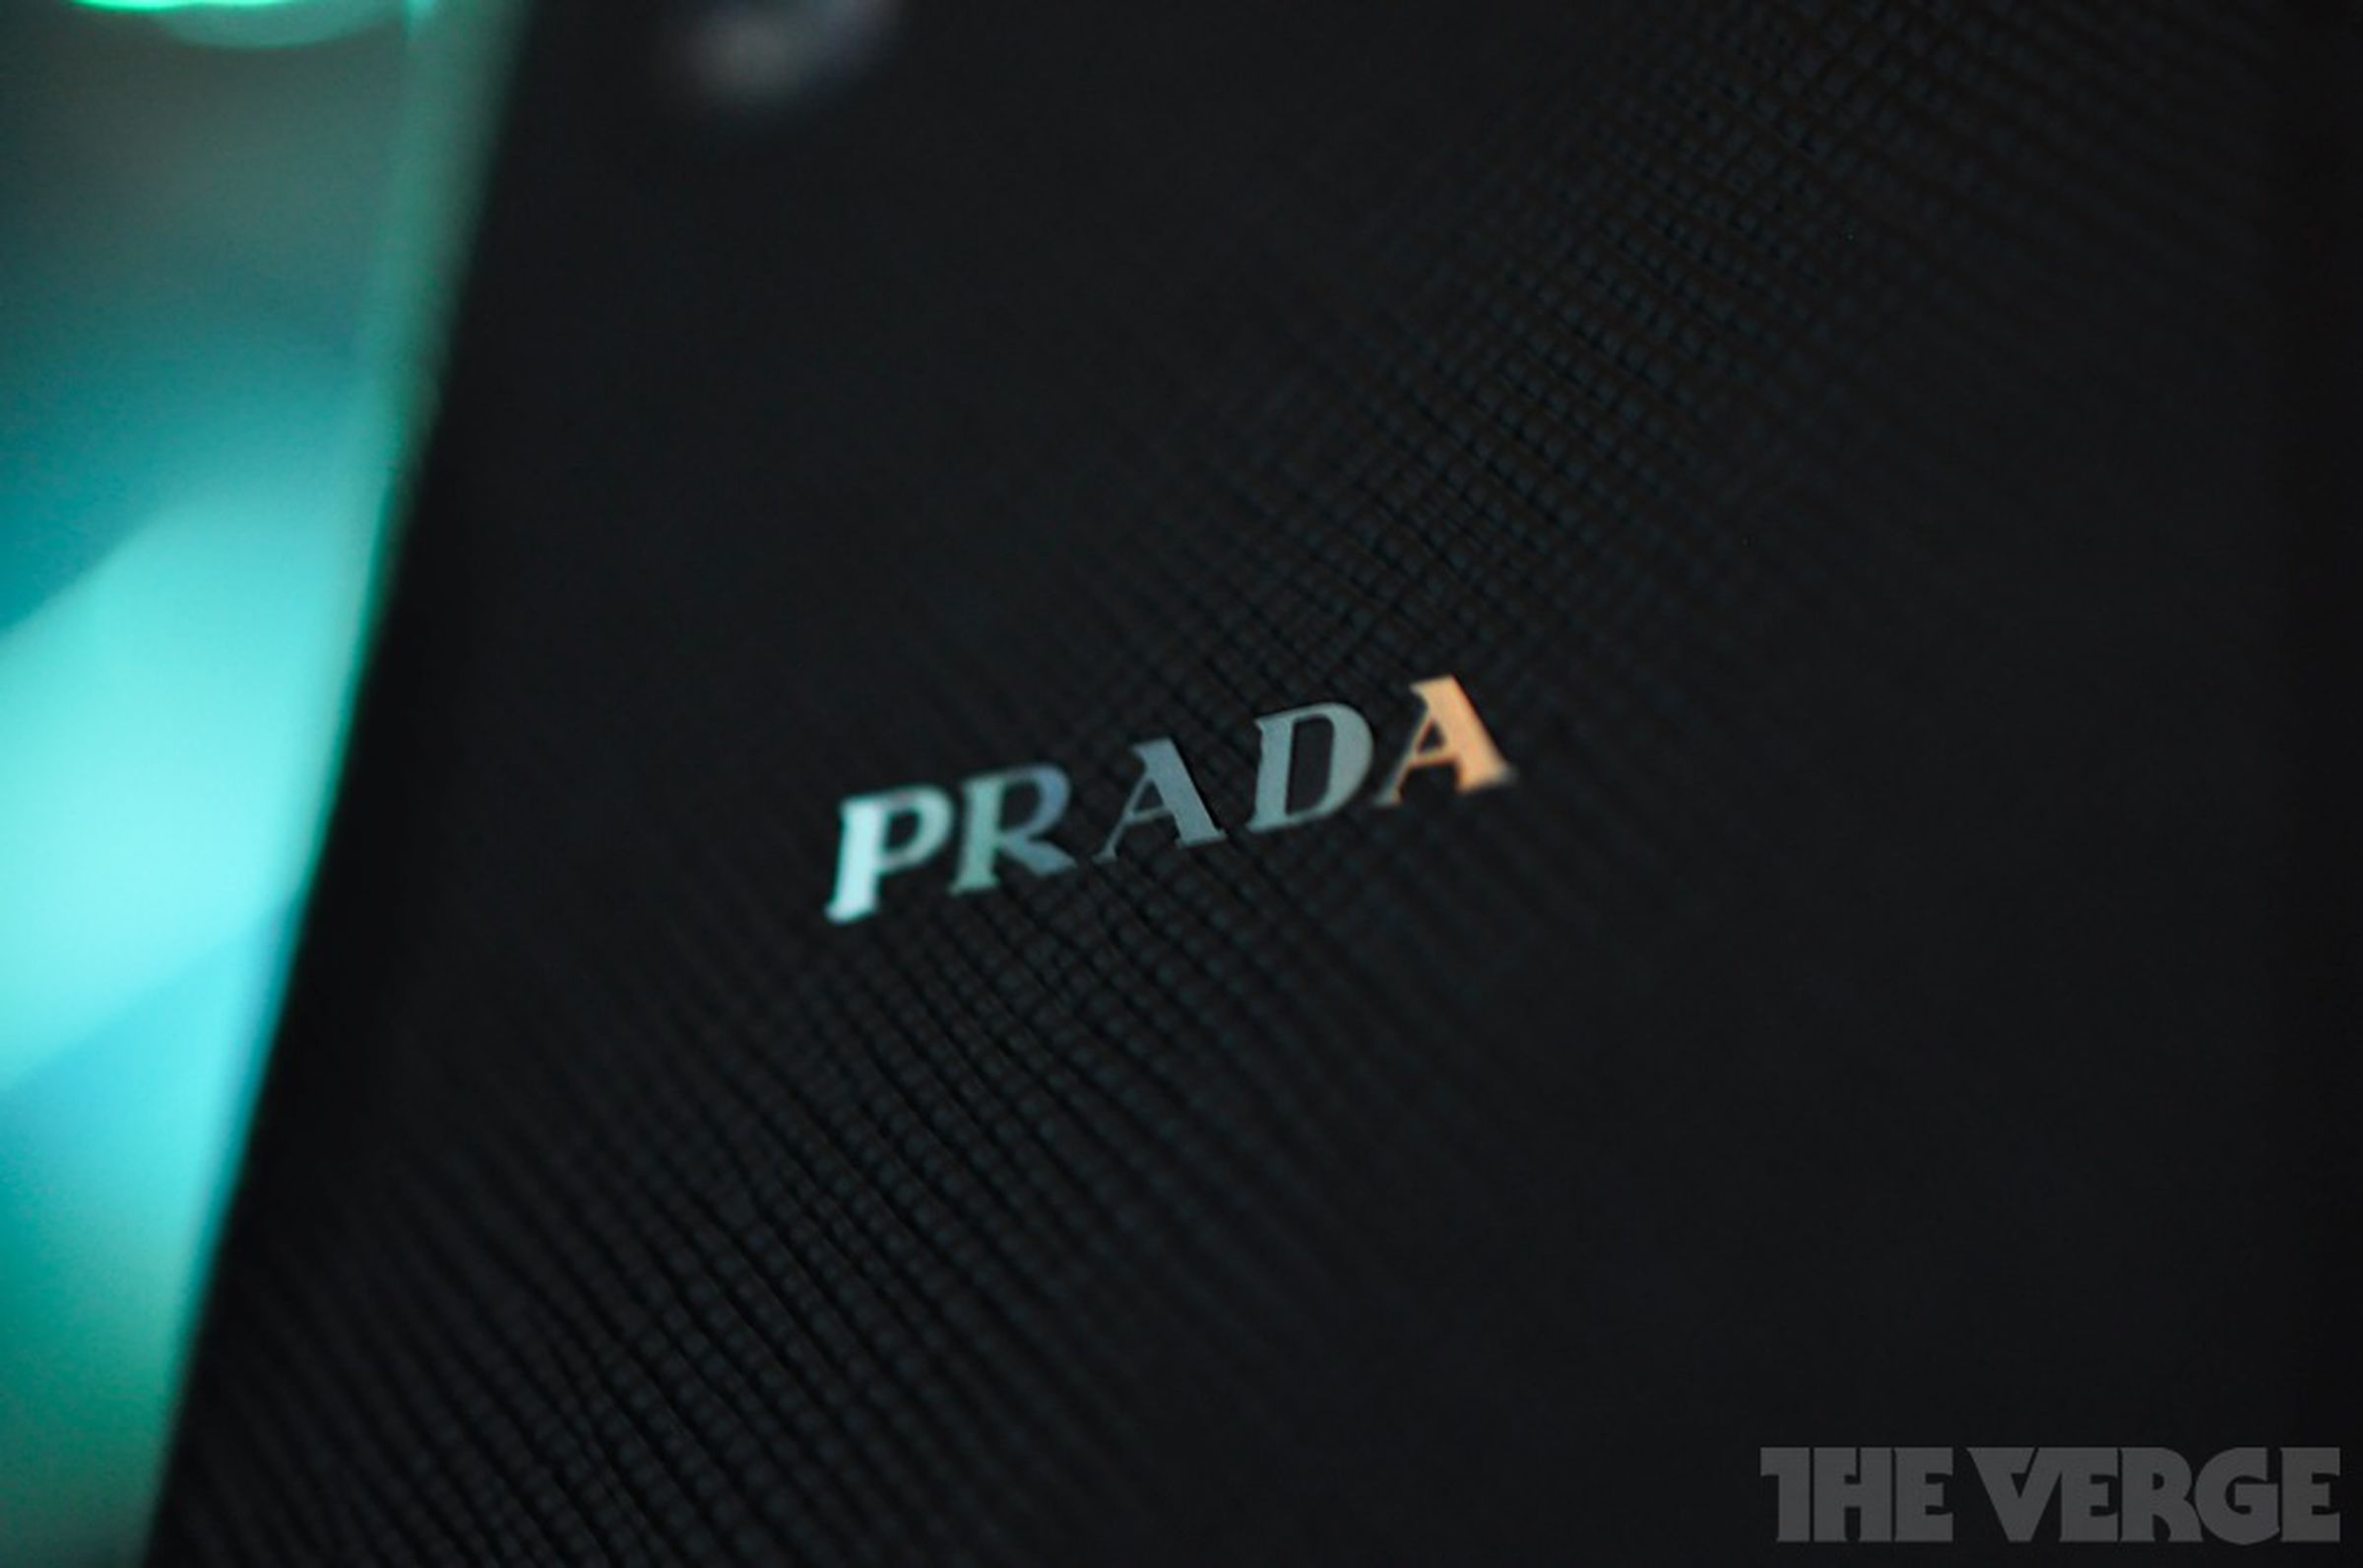 Prada Phone by LG 3.0 hands-on photos